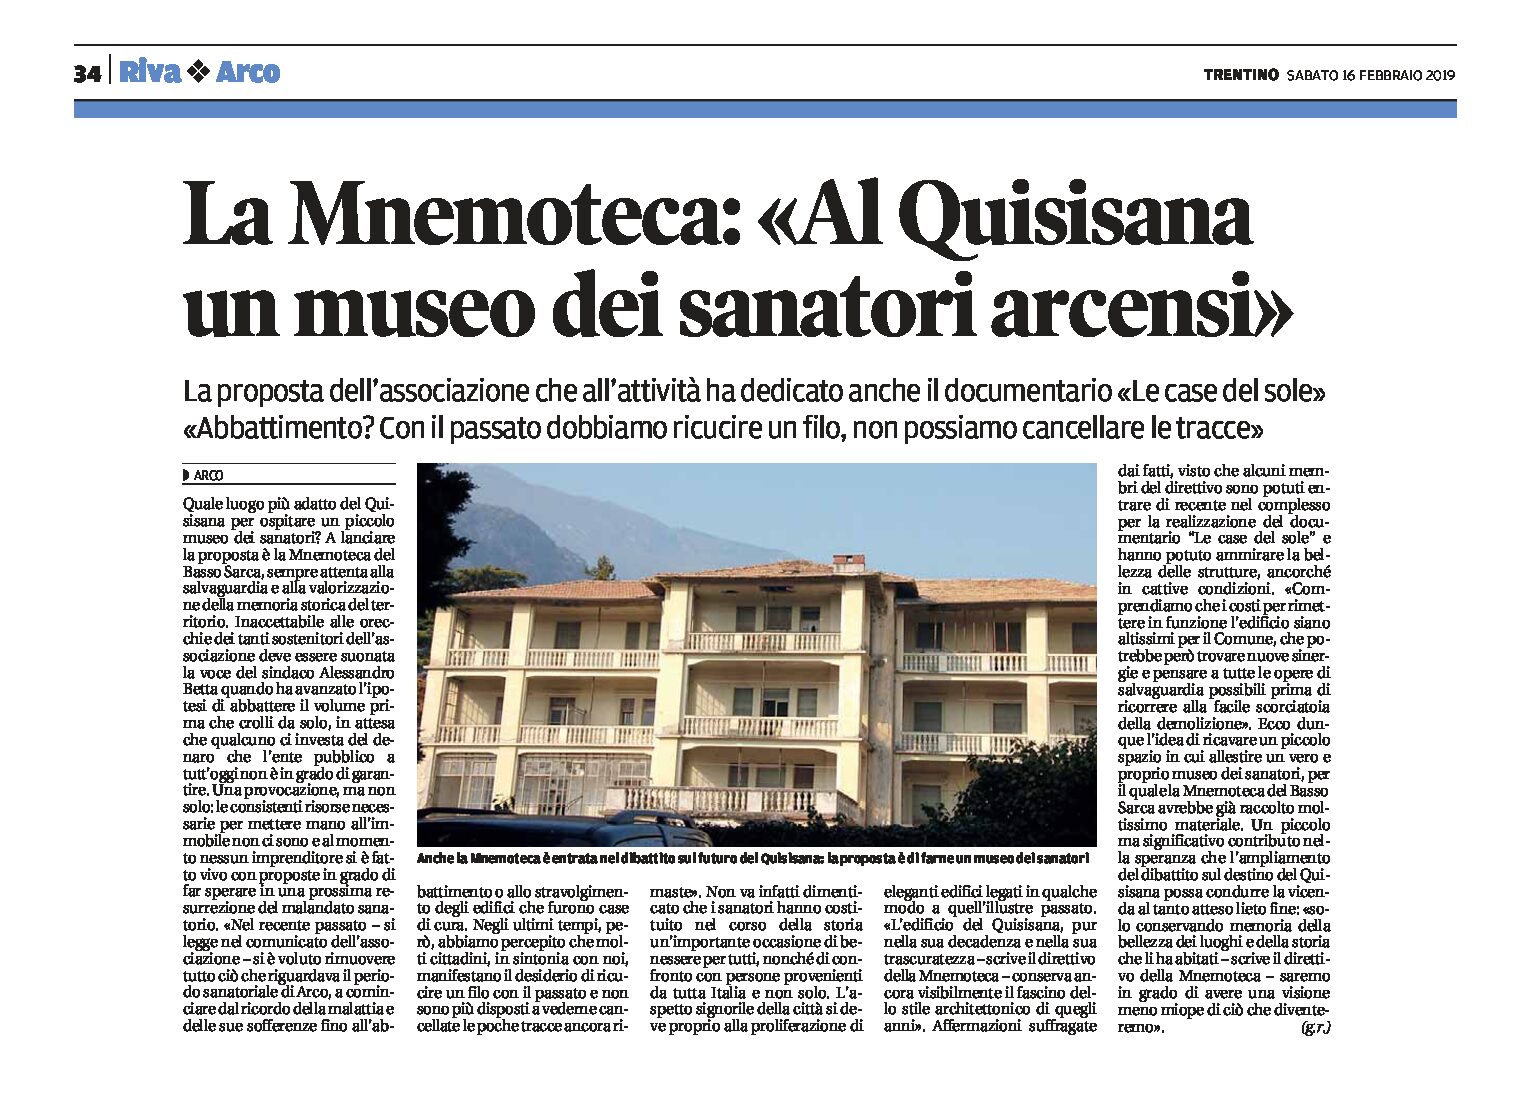 Arco, ex Quisisana: la Mnemoteca “un museo dei sanatori arcensi”